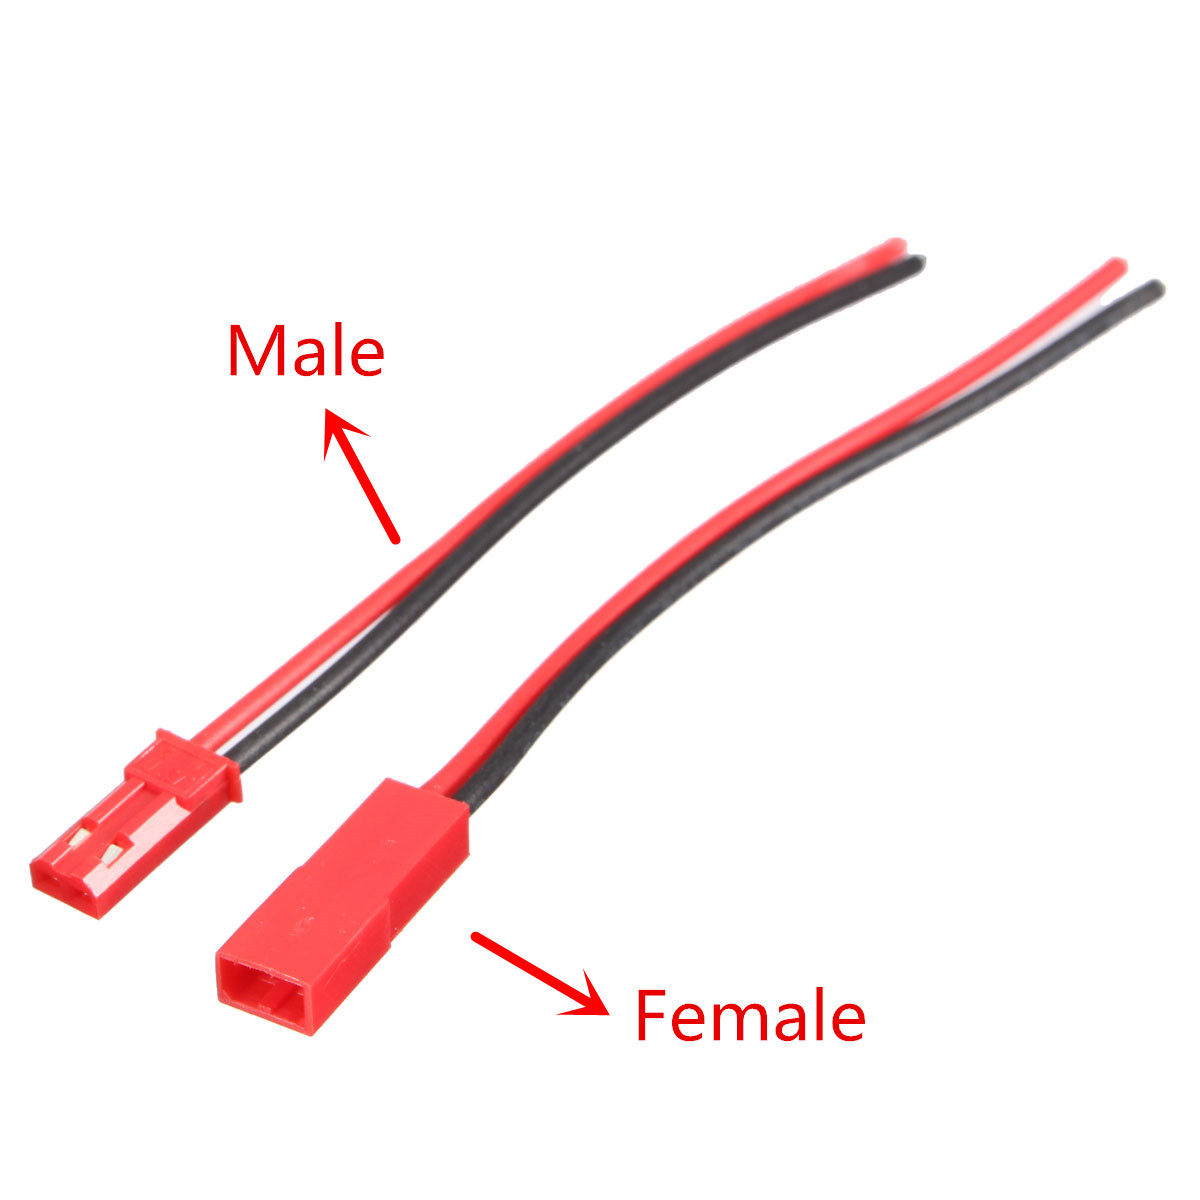 Male JST Connector Plug Cables